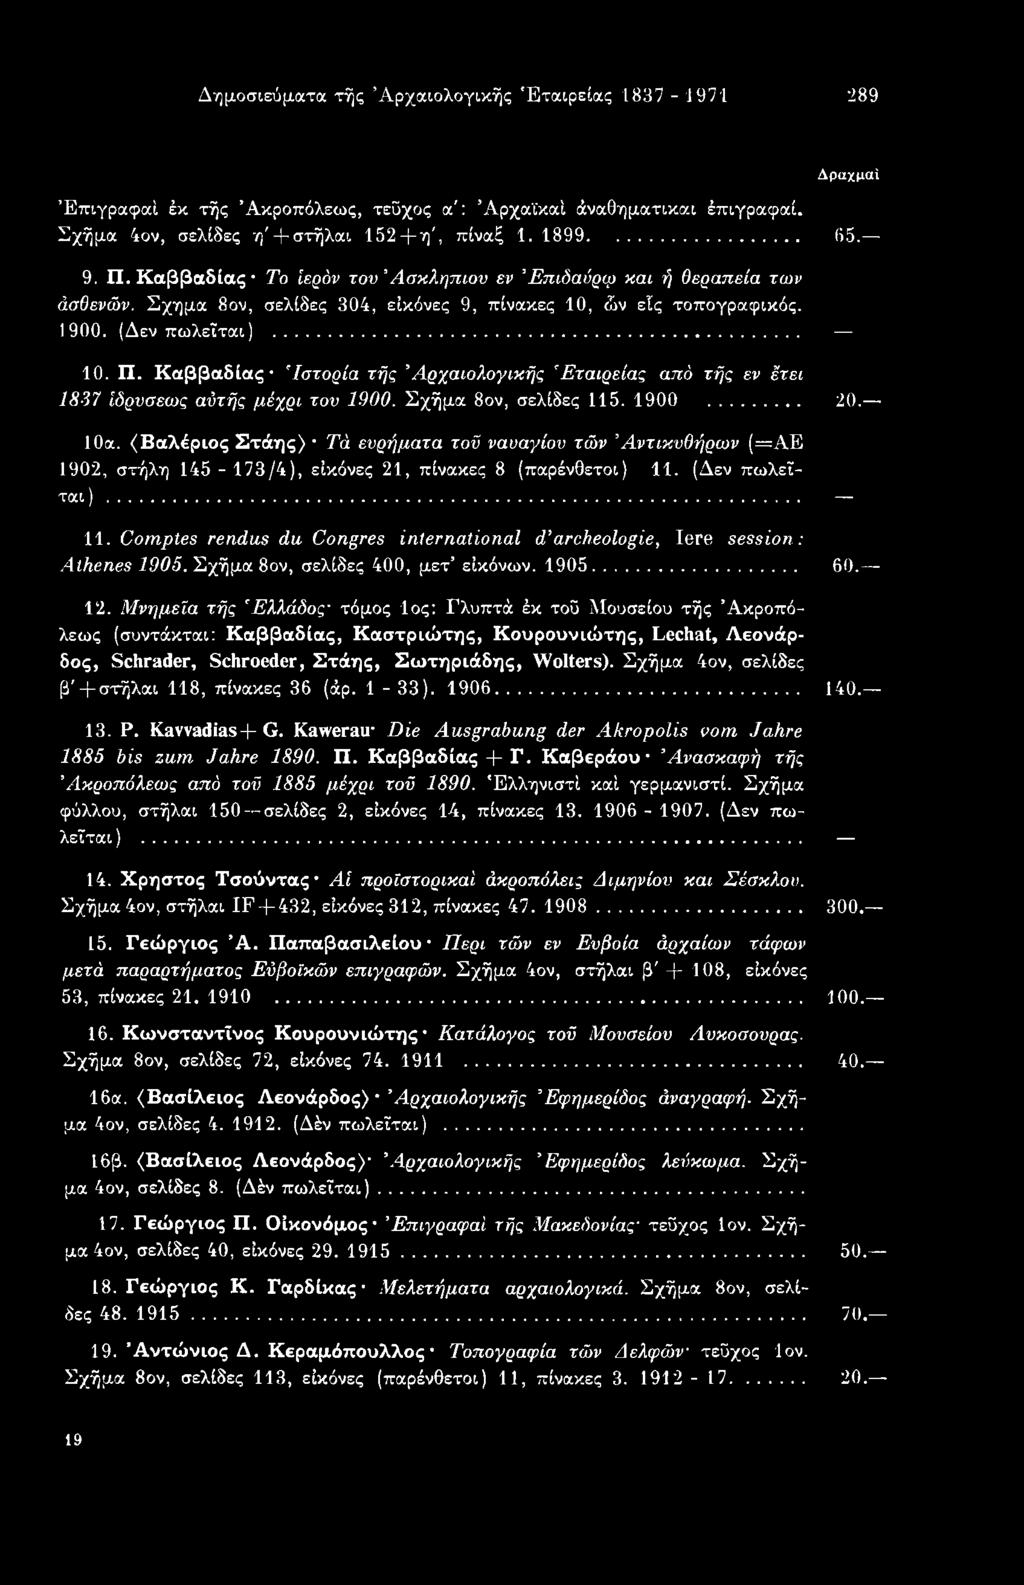 Comptes rendus du Congres international d archeologie, Iere session: Athenes 1905. Σχήμα 8ov, σελίδες 400, μετ εικόνων. 1905... 60. 12.